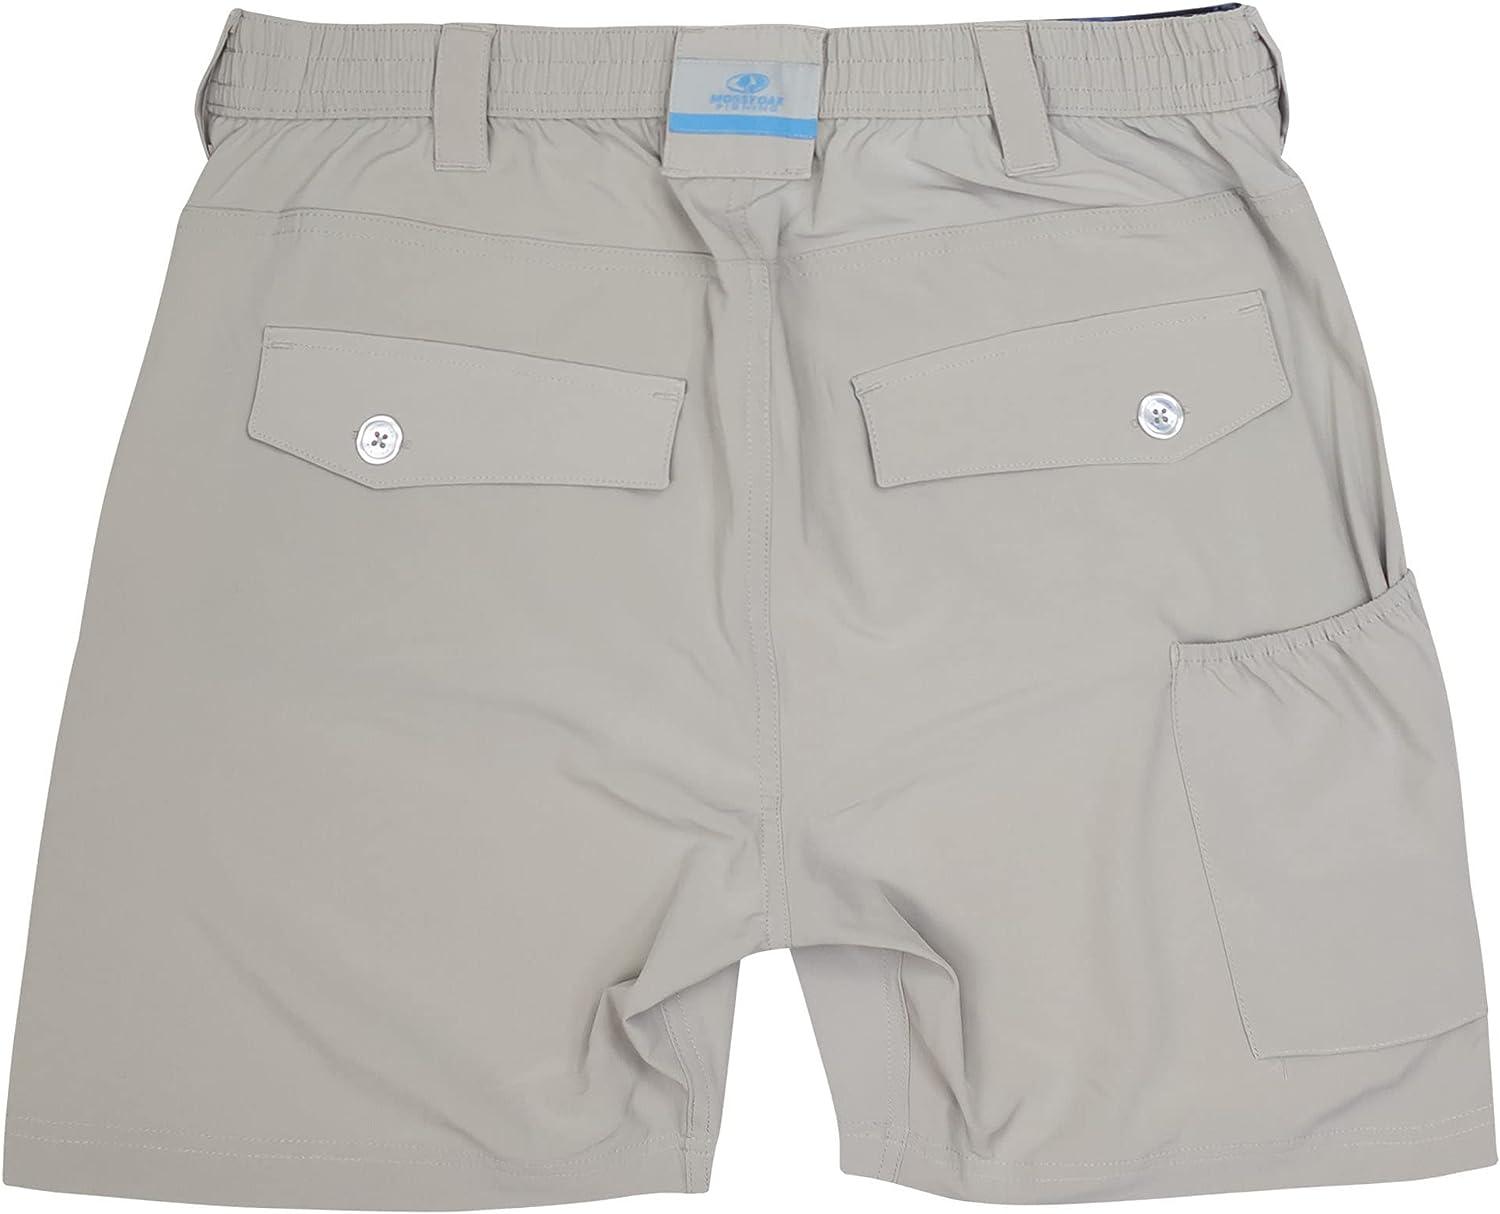 Mossy Oak Fishing Shorts for Men Quick Dry Flex Cool Gray Medium